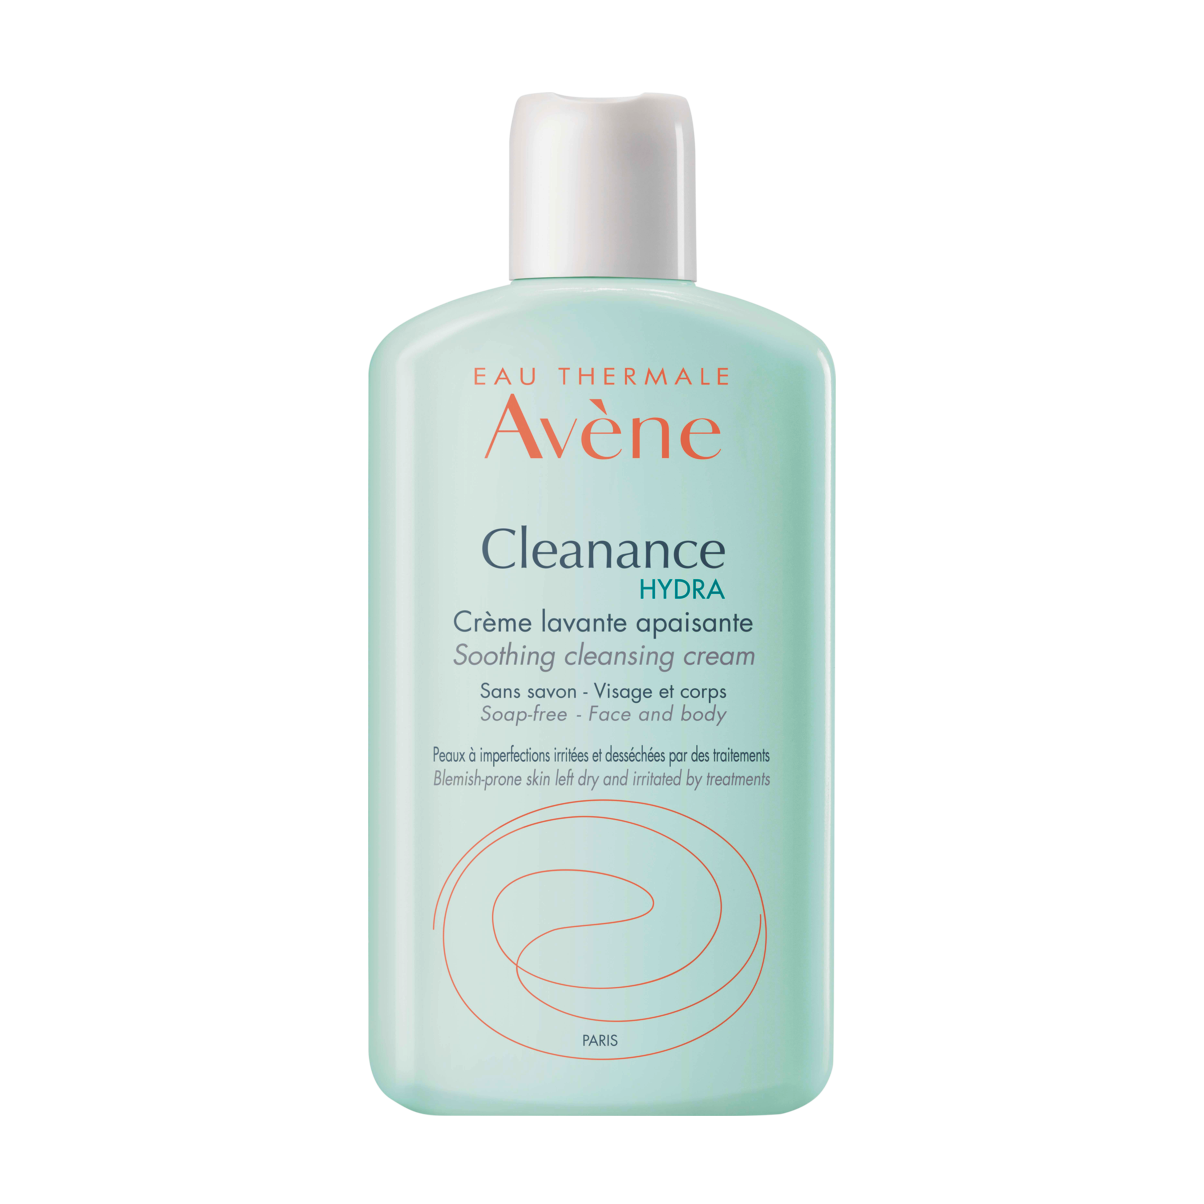 AVENE Cleanance Hydra Cleansing Cream (200ml)